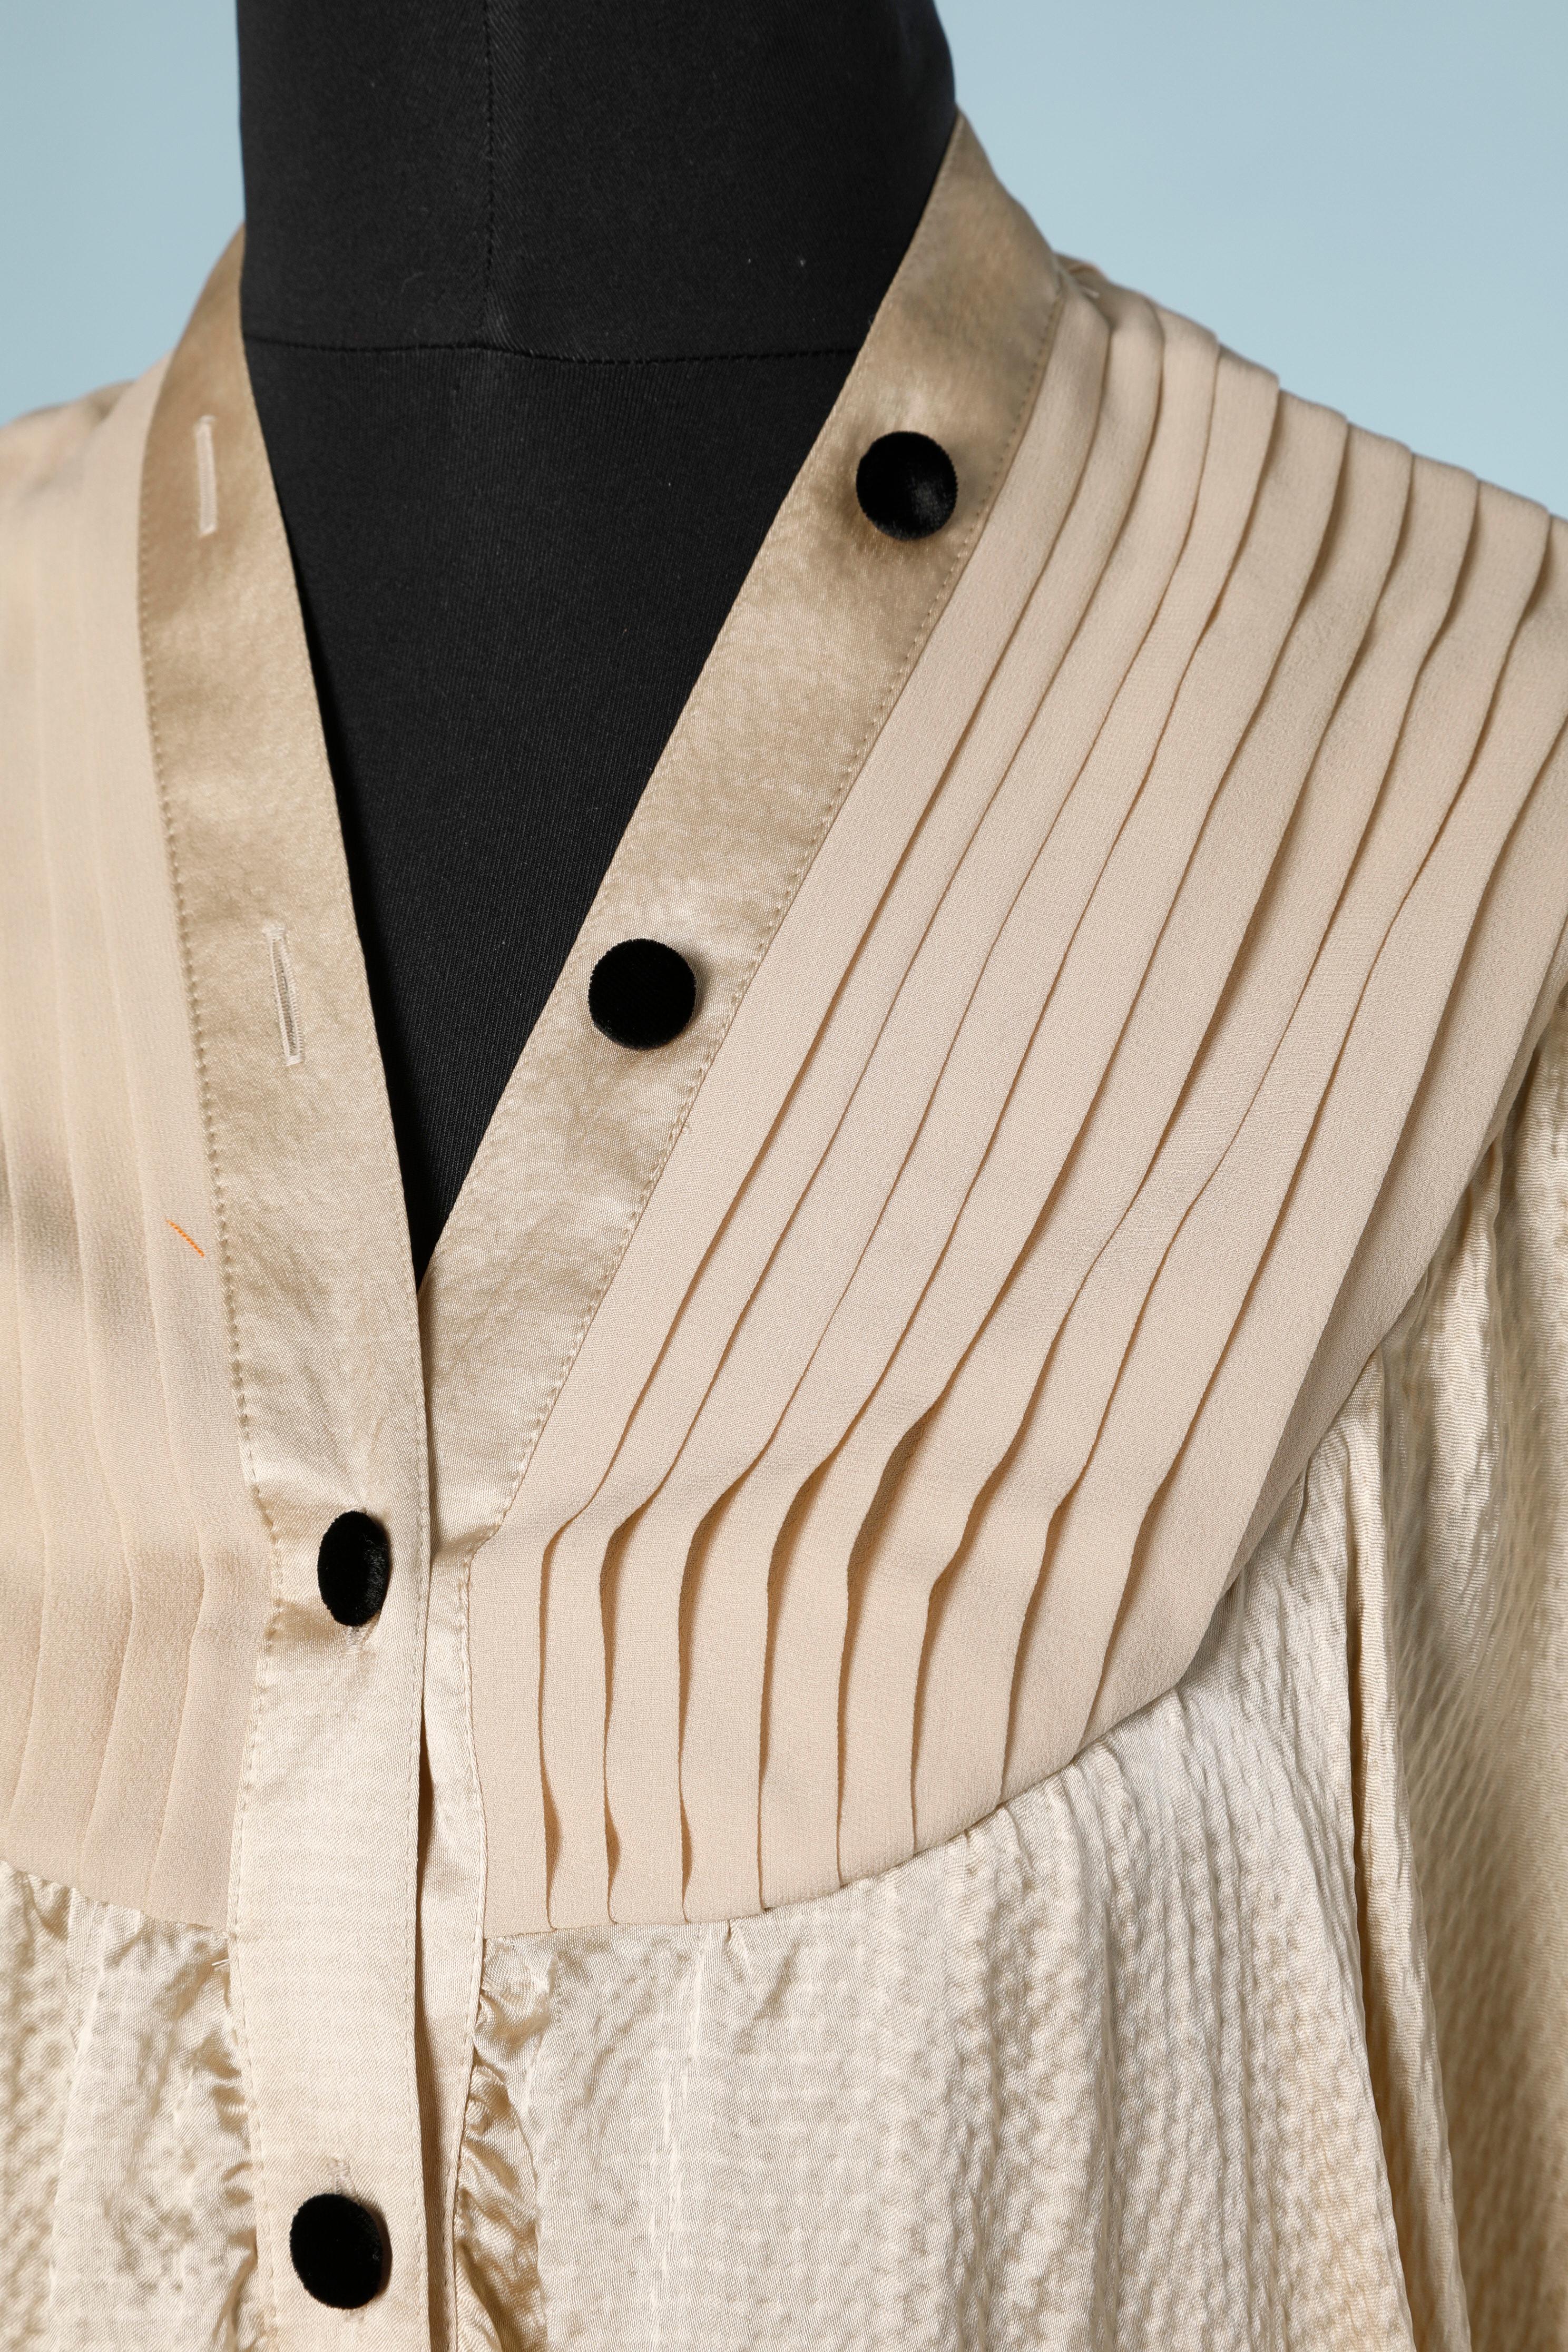 Ivory silk dress with black velvet buttons.
Size L